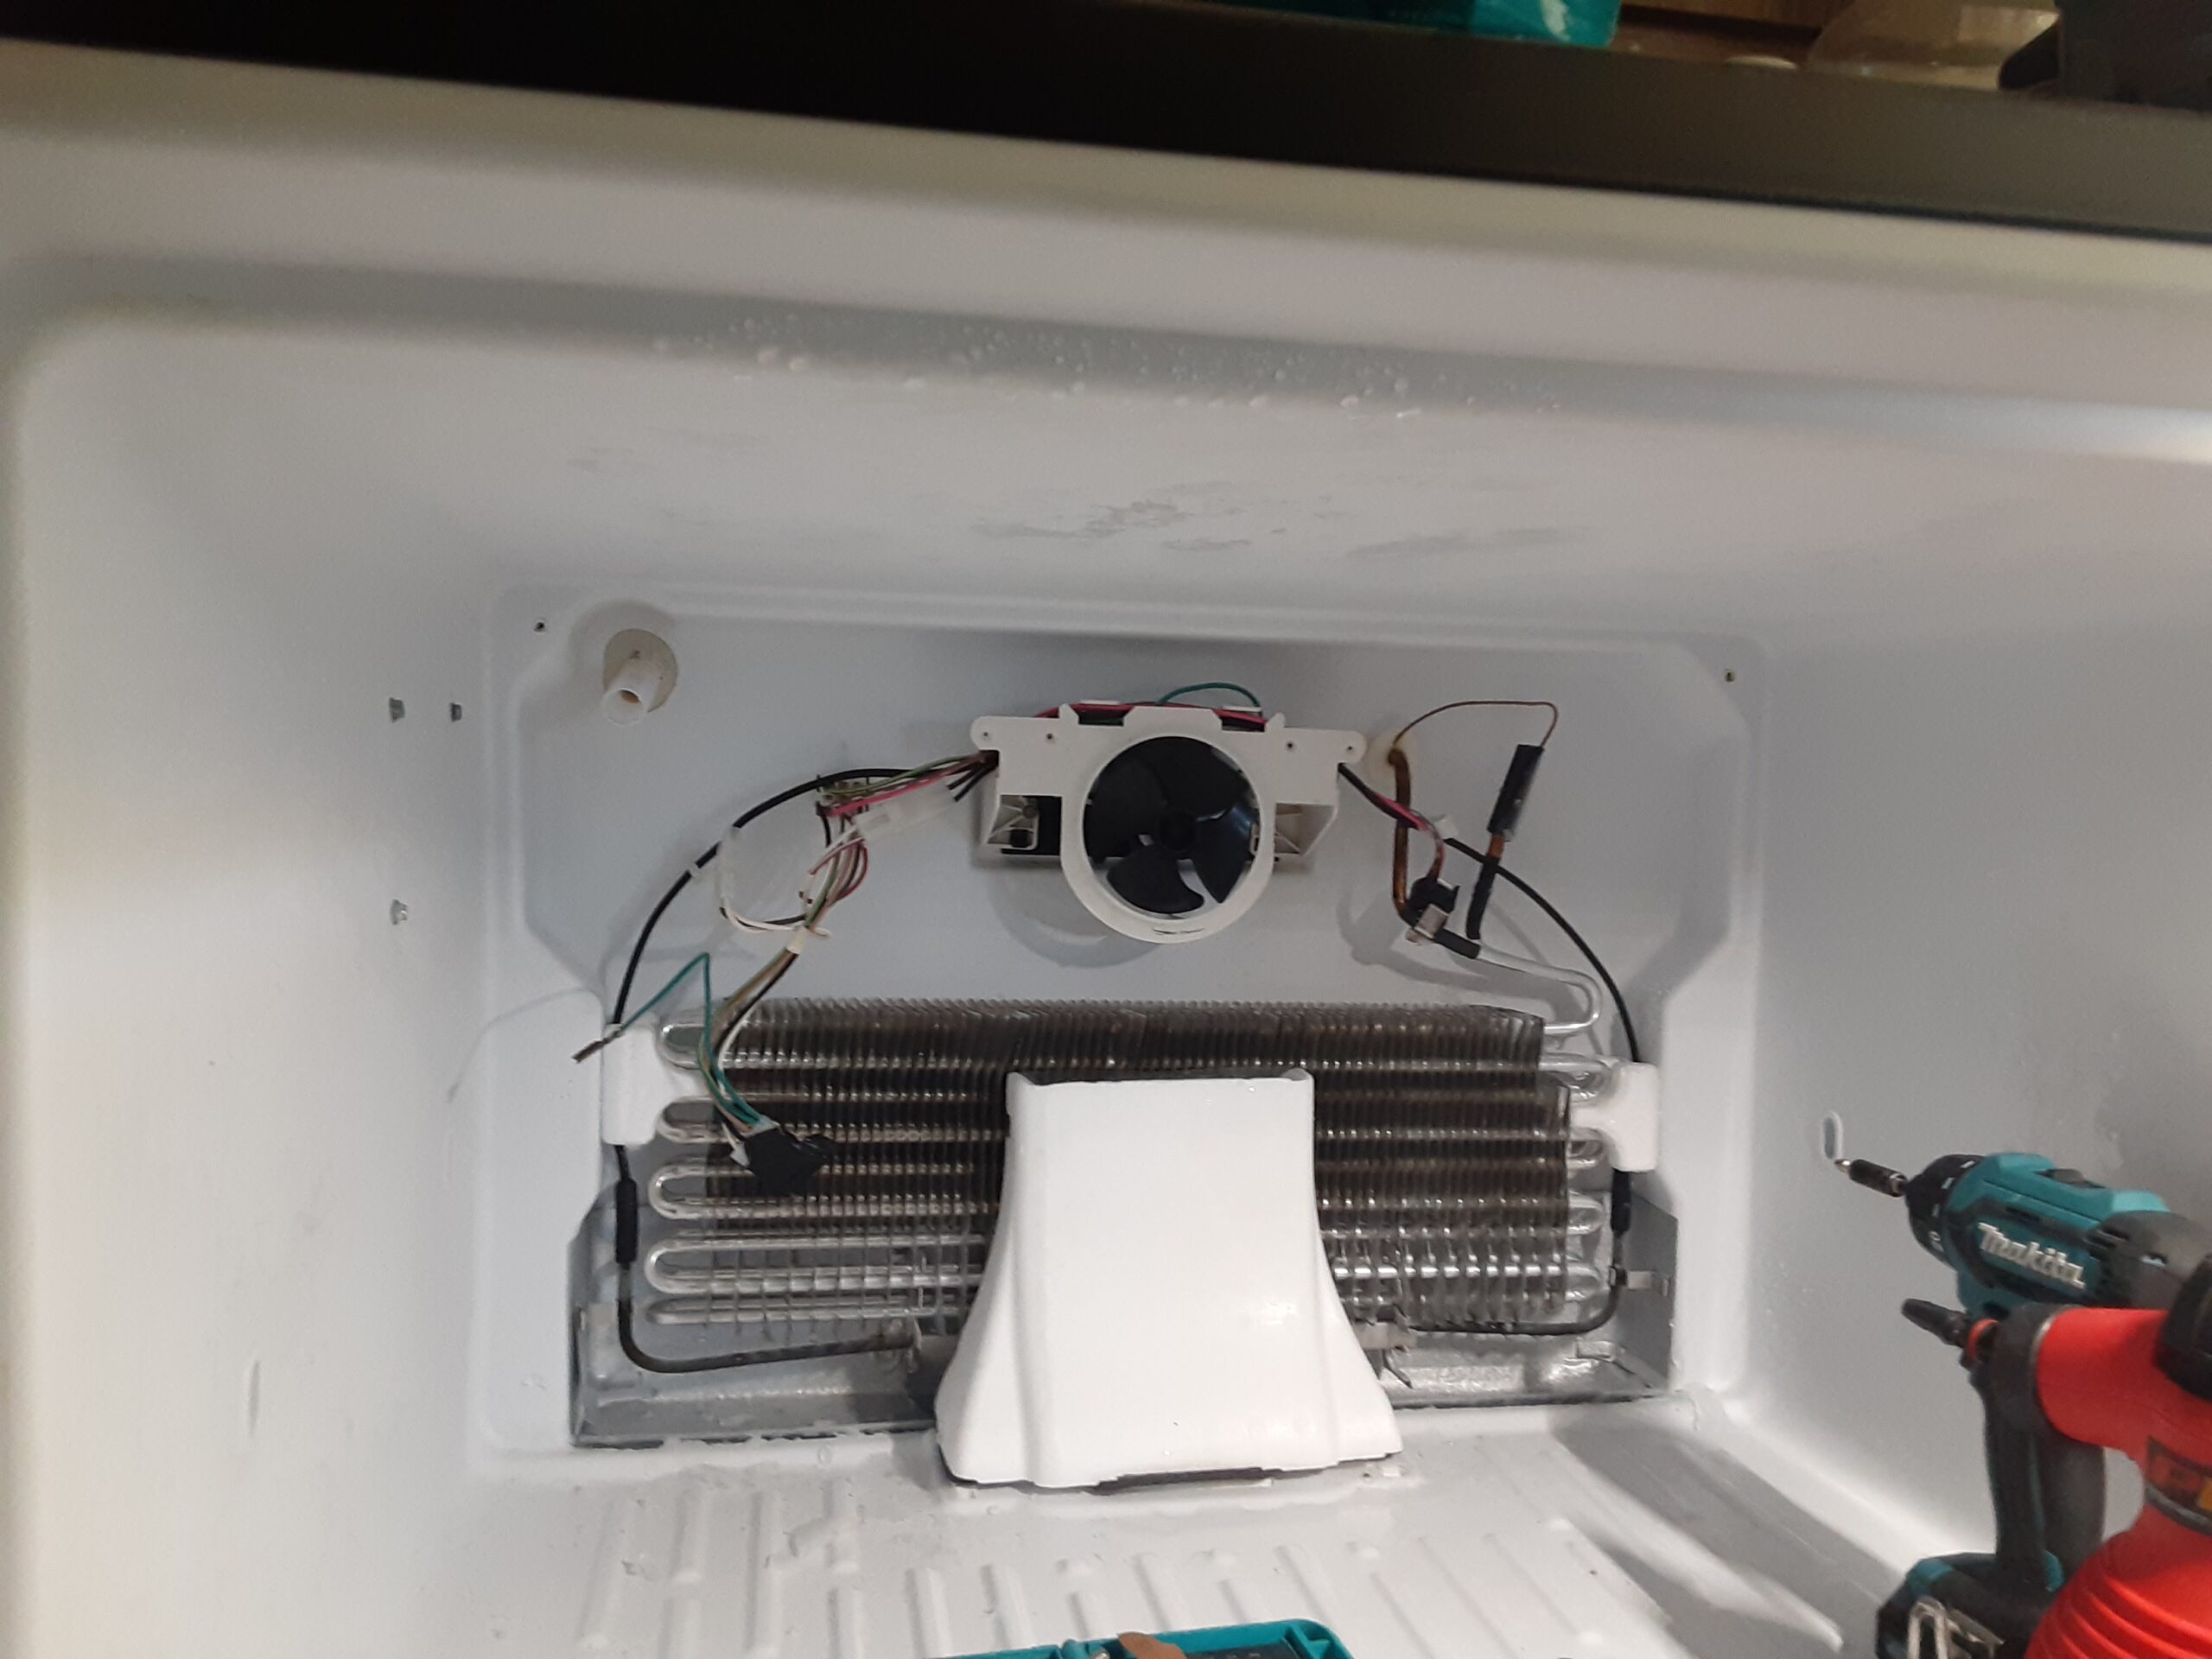 appliance repair refrigerator repair not cooling damaged fan motor sun bay drive meadow woods orlando fl 32824